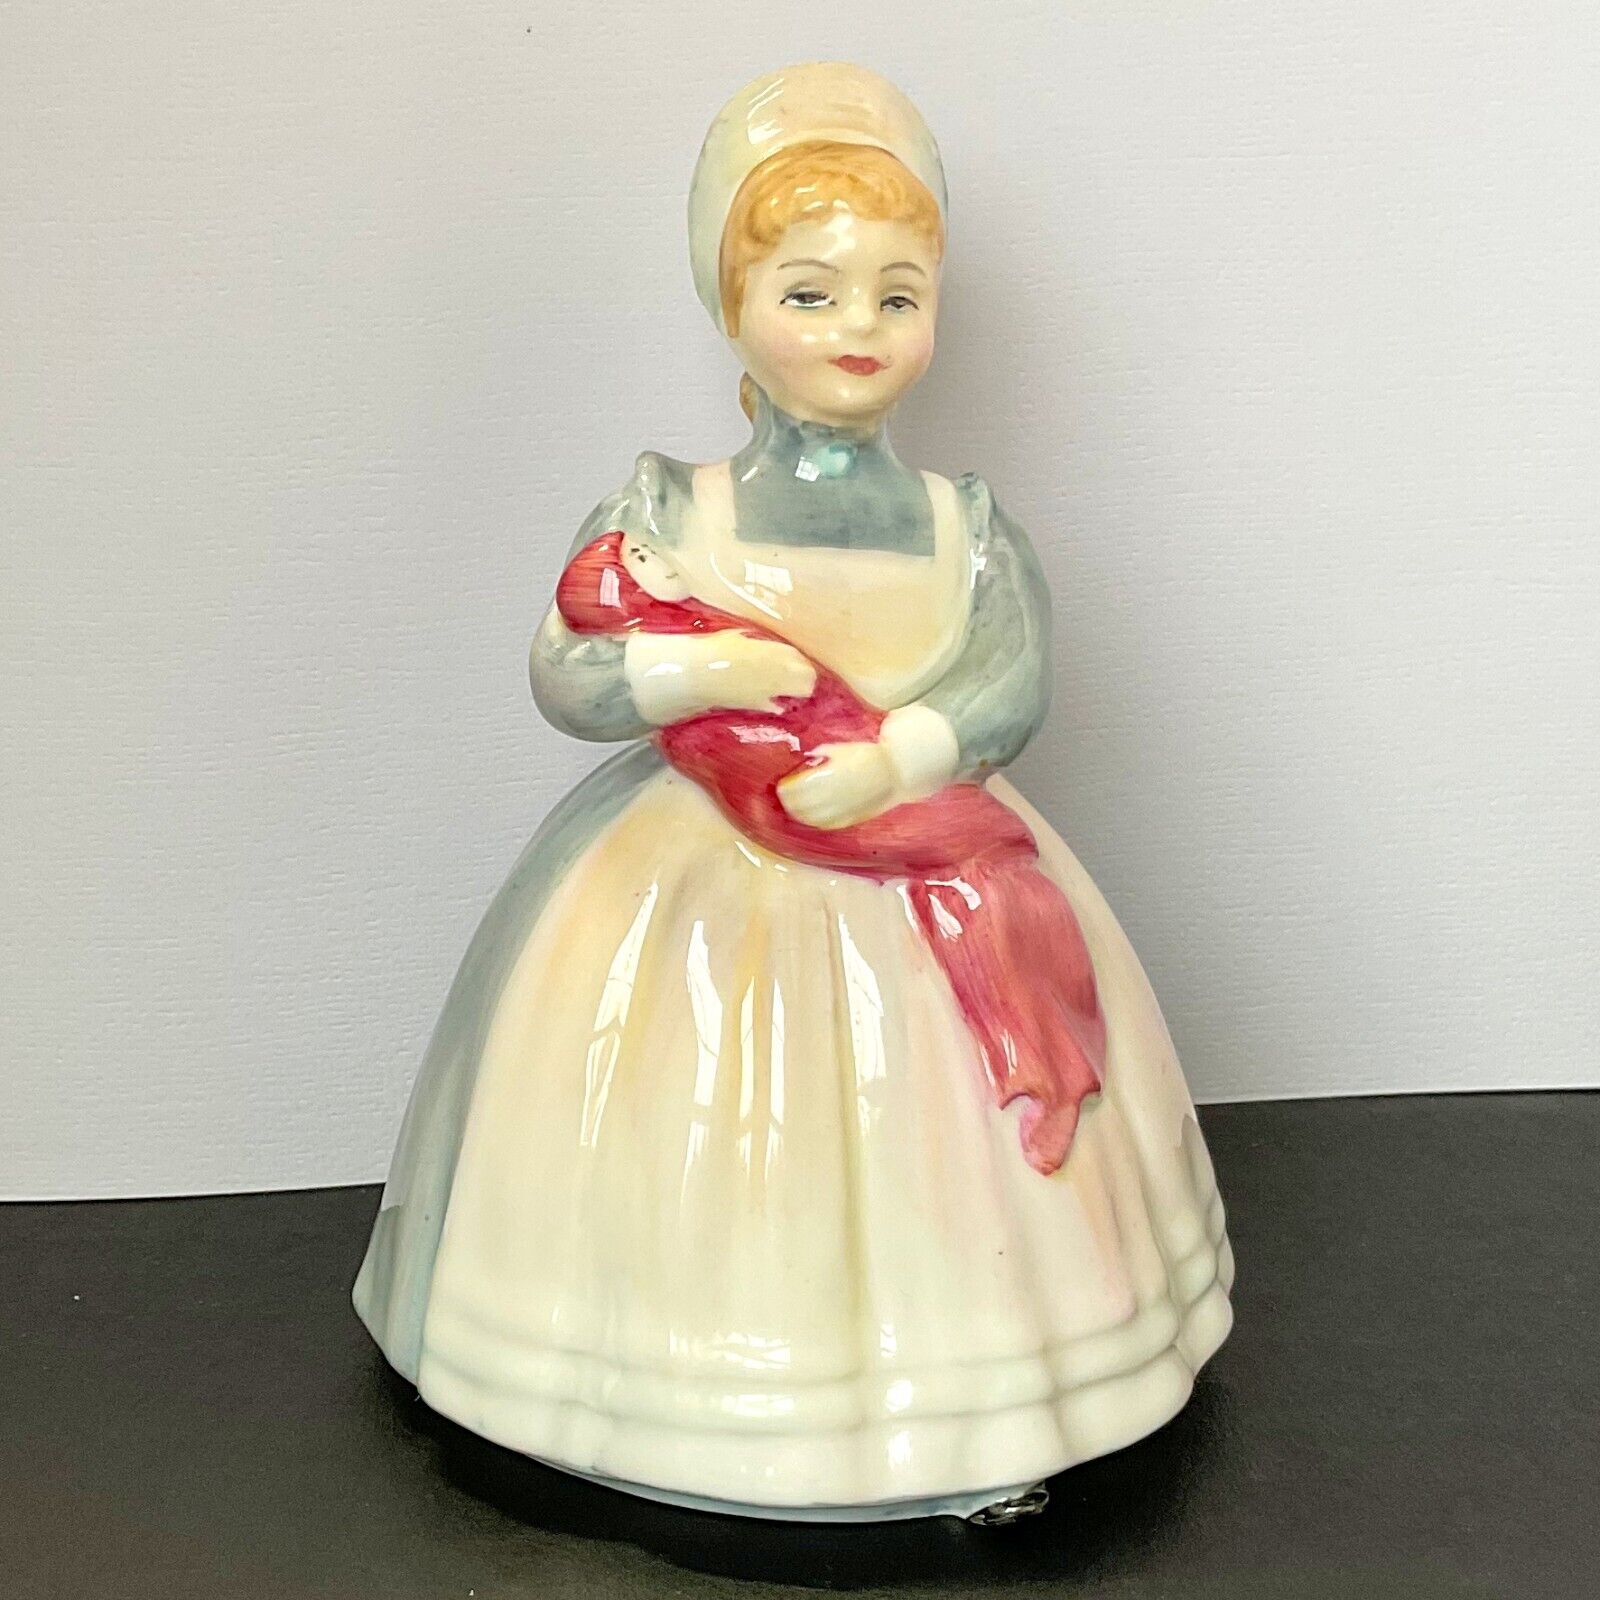 Vintage Royal Doulton 'The Rag Doll' HN 2142 Figurine, Bone China, England, 1954